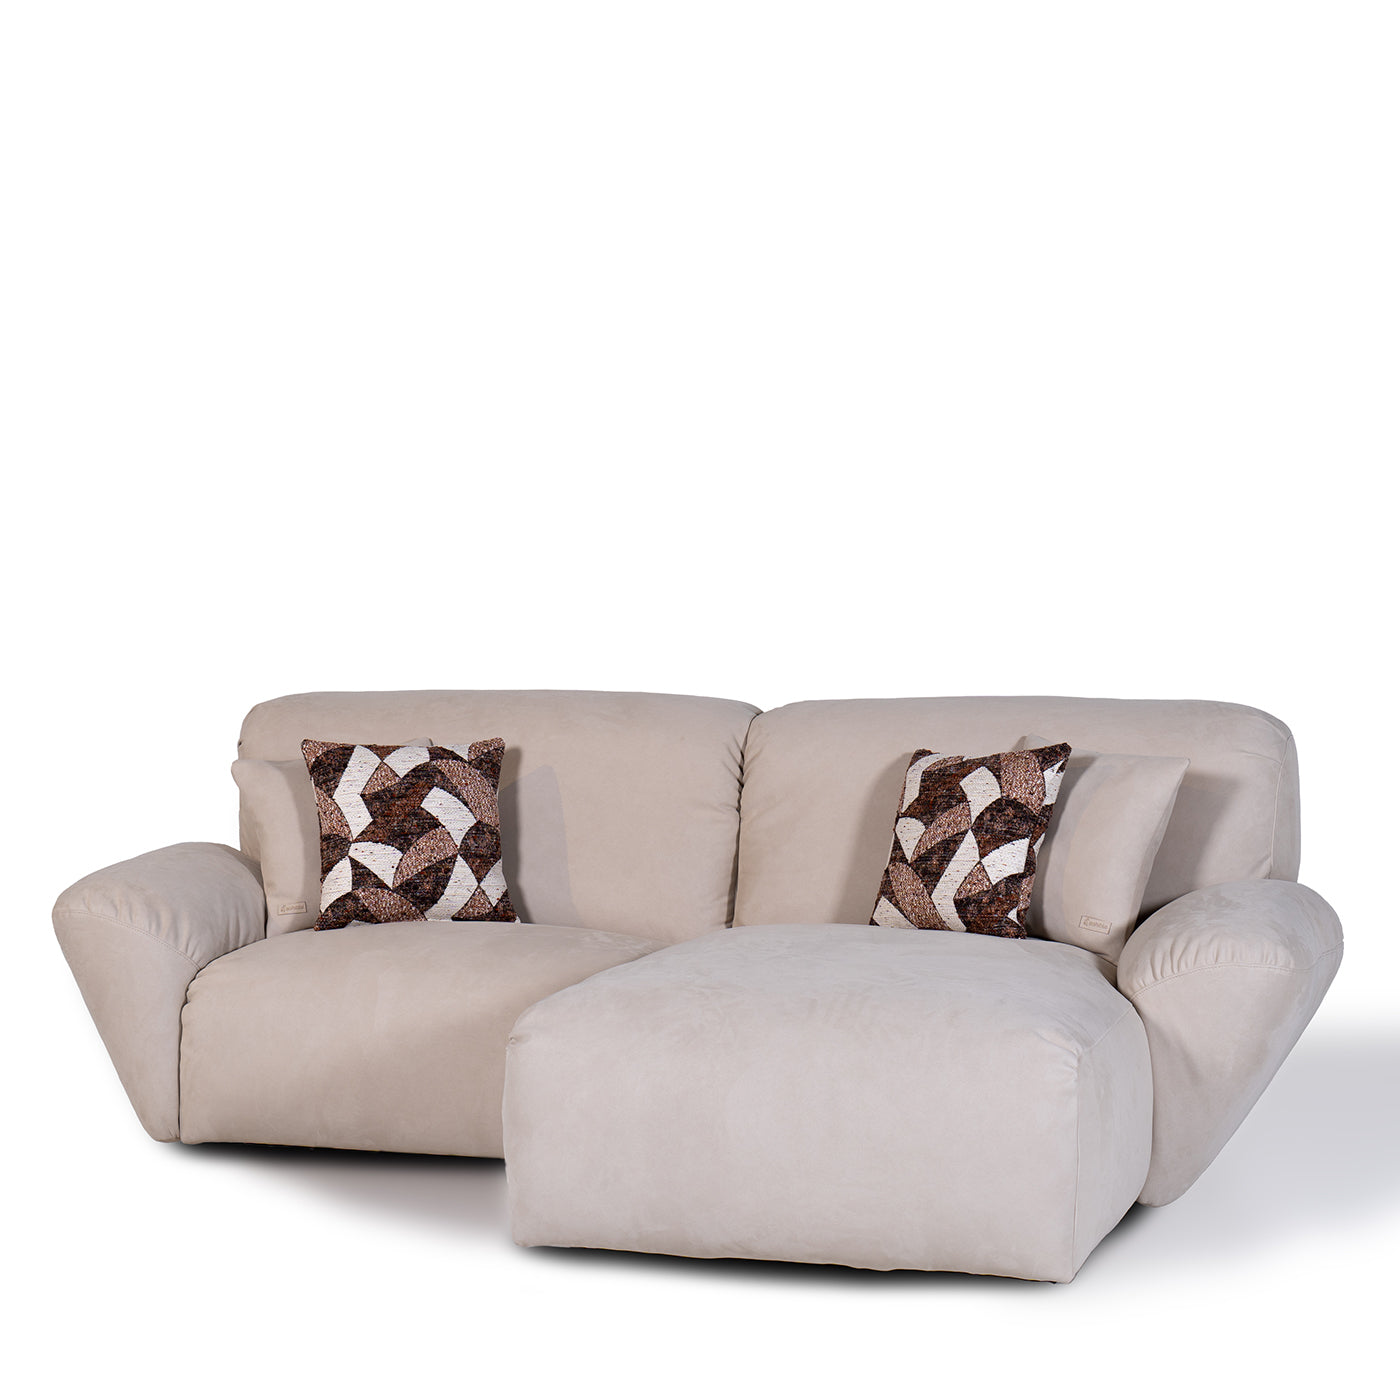 Beluga Beige 2-Seater Sofa by Marco & Giulio Mantellassi - Alternative view 2